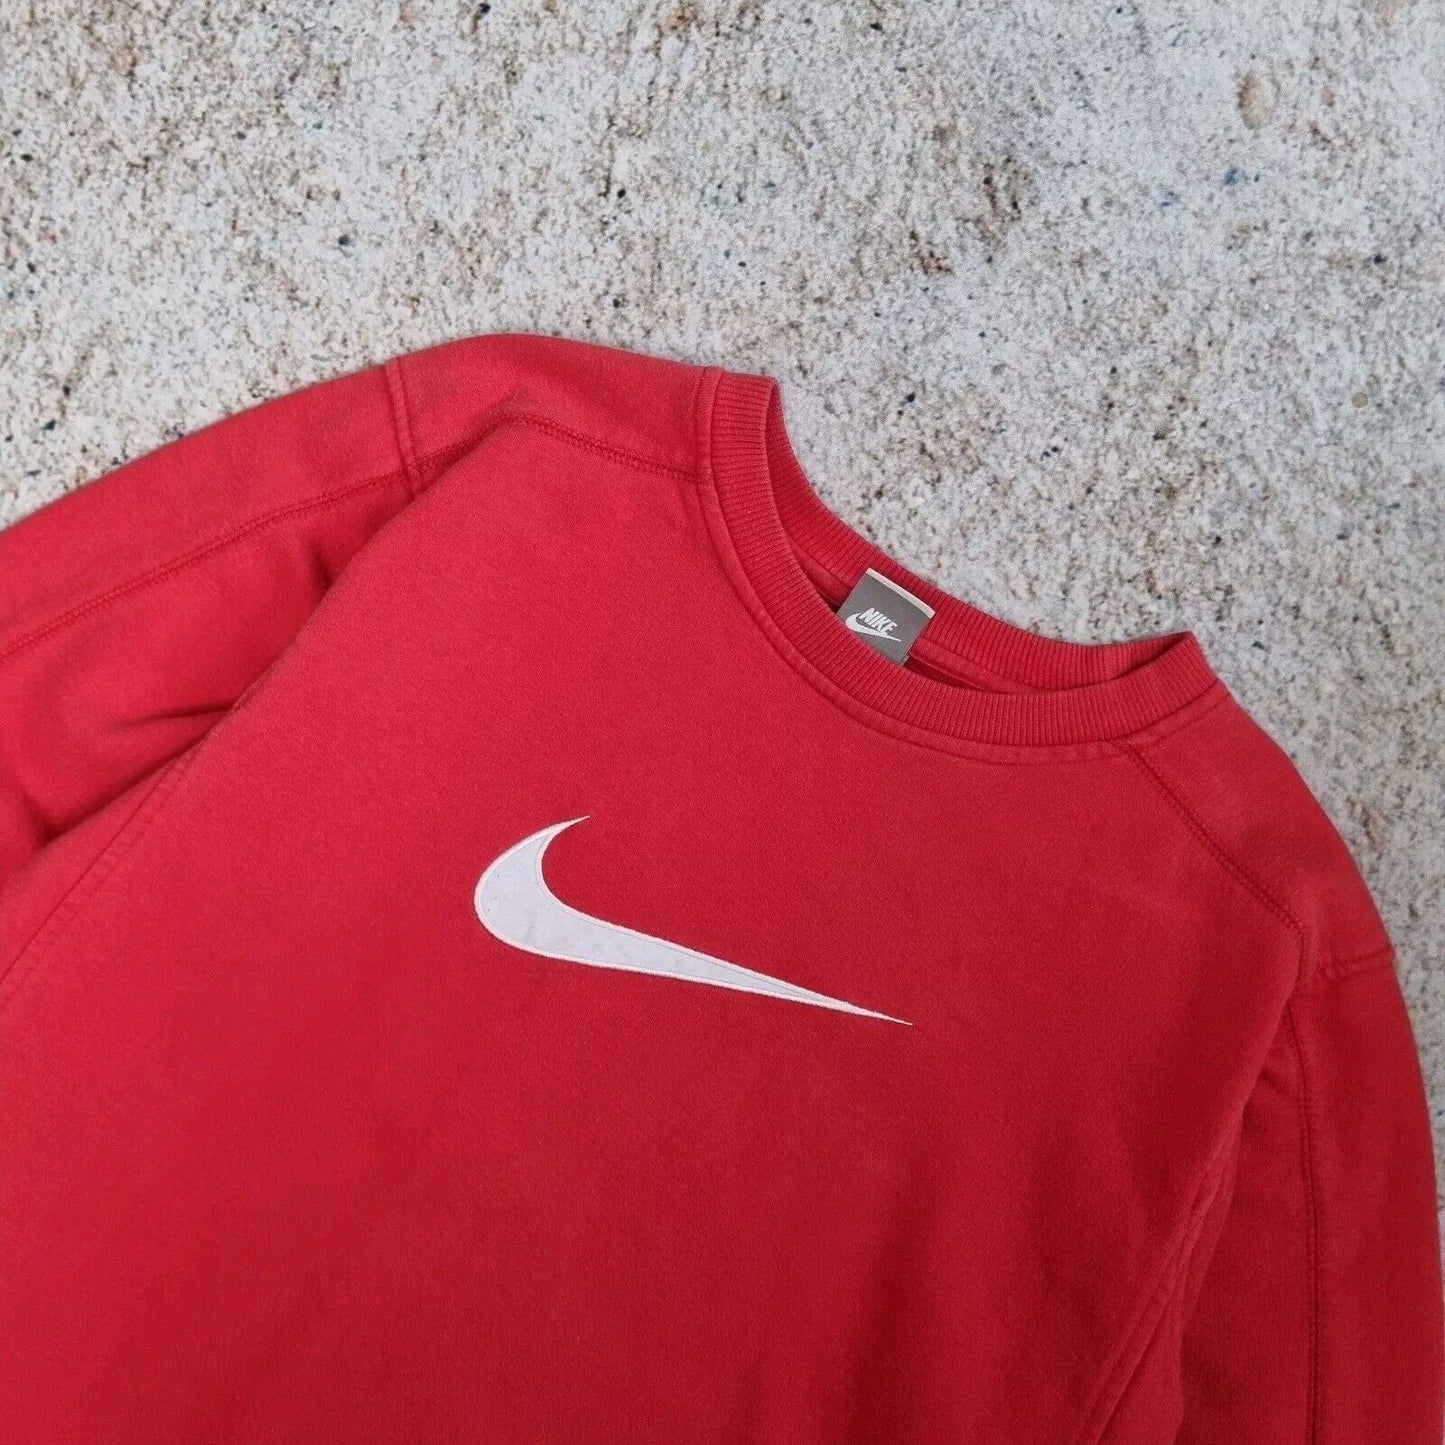 Nike Sweatshirt Red Chunky Big Centre Swoosh Rare Nike Retro Size S Y2K